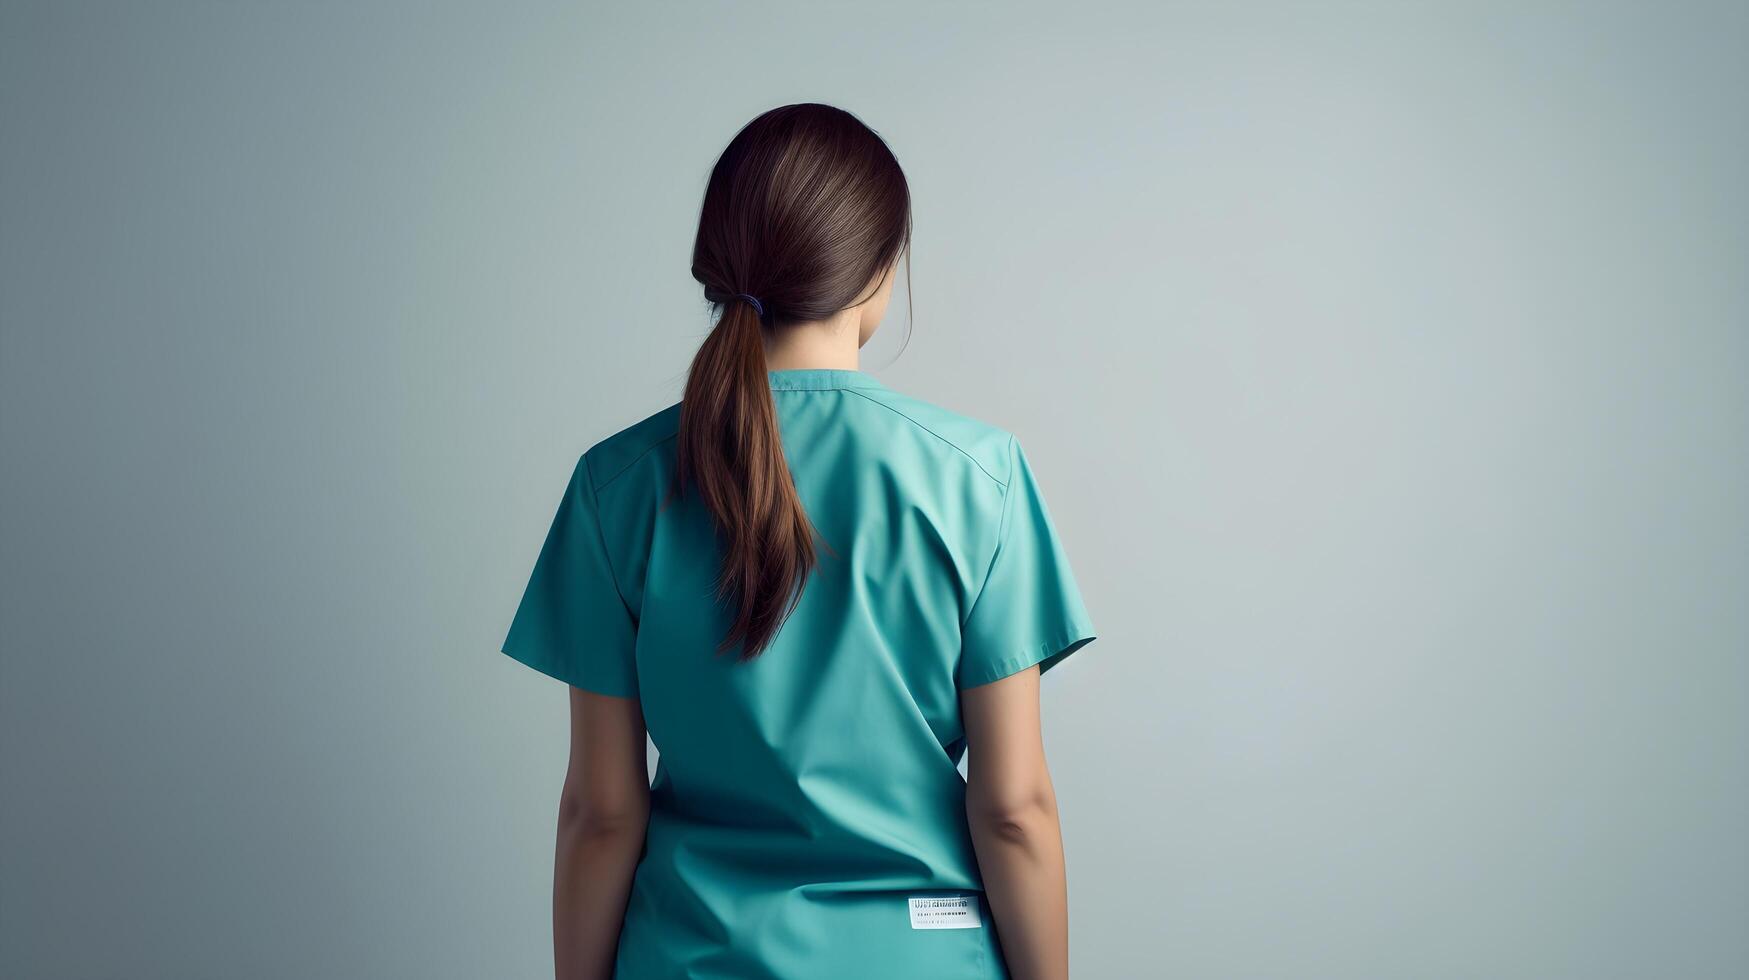 AI generated A nurse in uniform providing care, isolated on a calm light grey. AI Generated photo